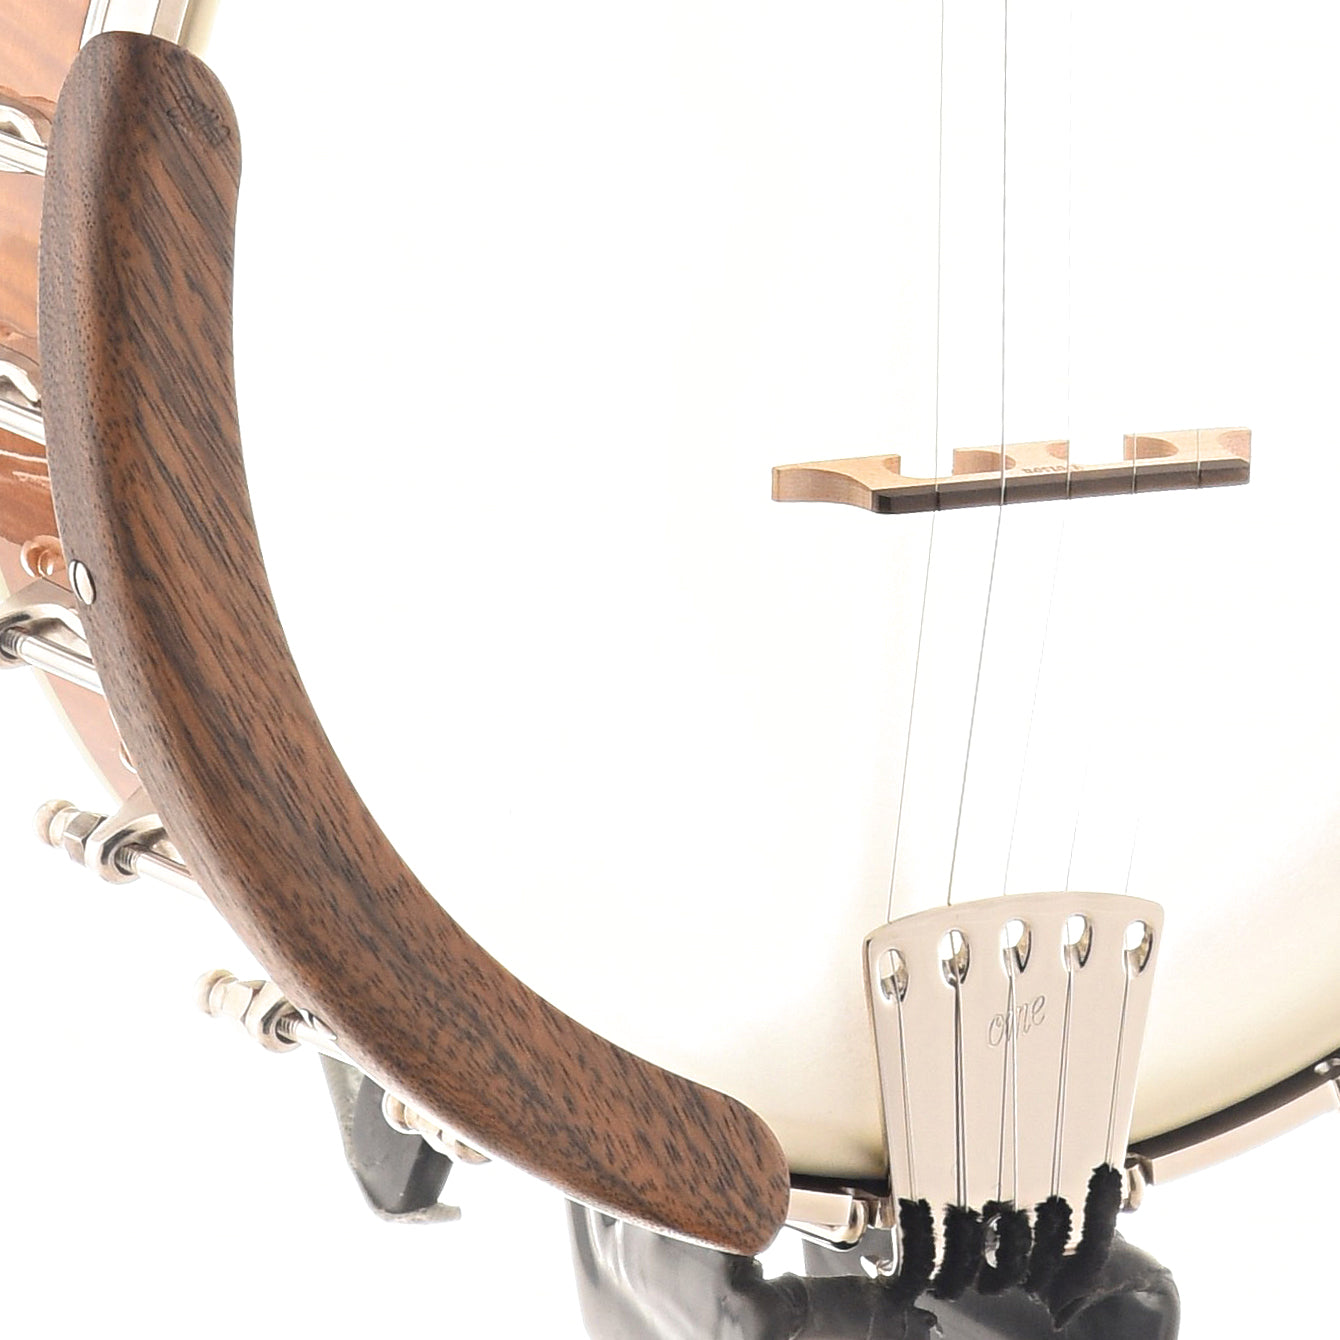 Image 3 of Ome Sweetgrass Openback Banjo & Case - Curly Maple - SKU# SWEETGRS-OBMPL : Product Type Open Back Banjos : Elderly Instruments